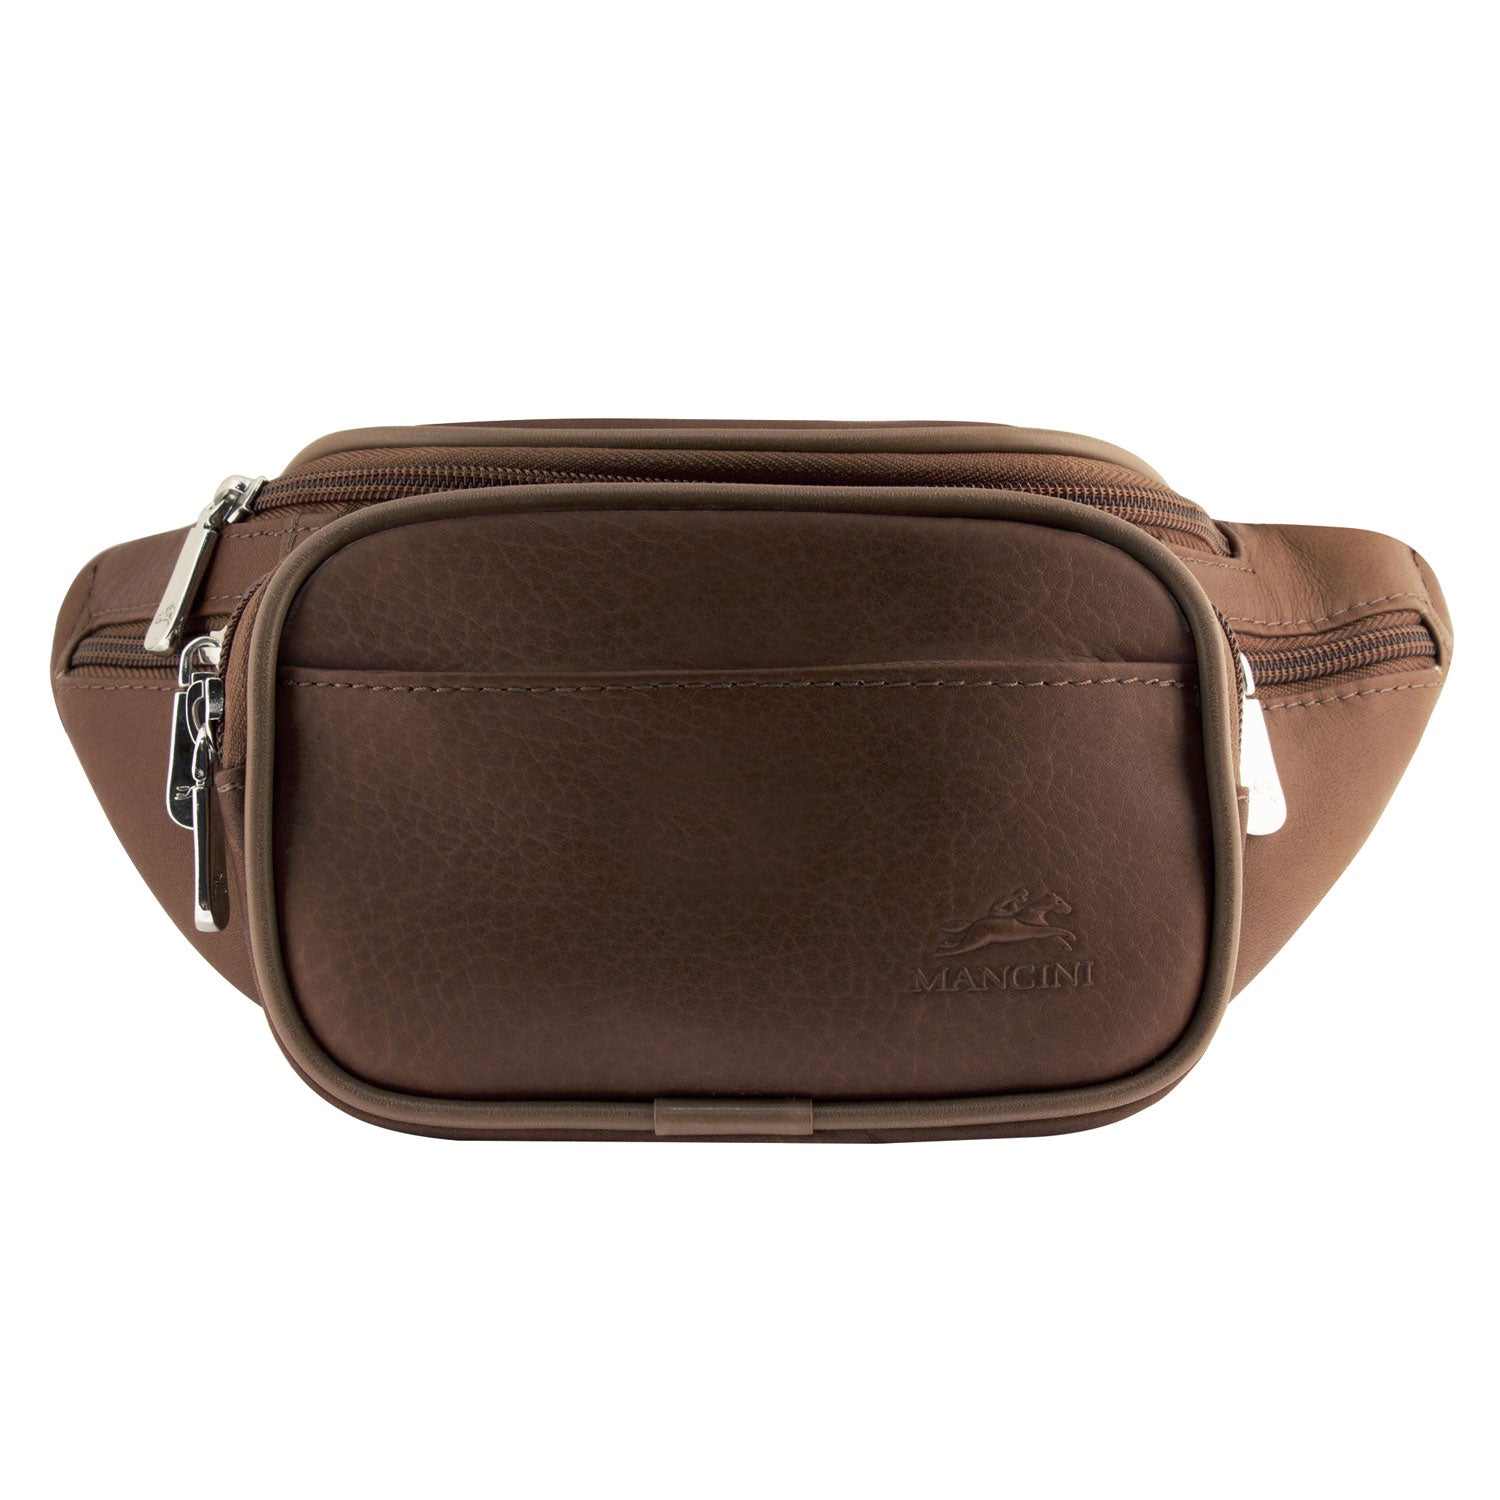 Mancini Leather Classic Waist Bag, 12" x 4" x 5.5", Brown